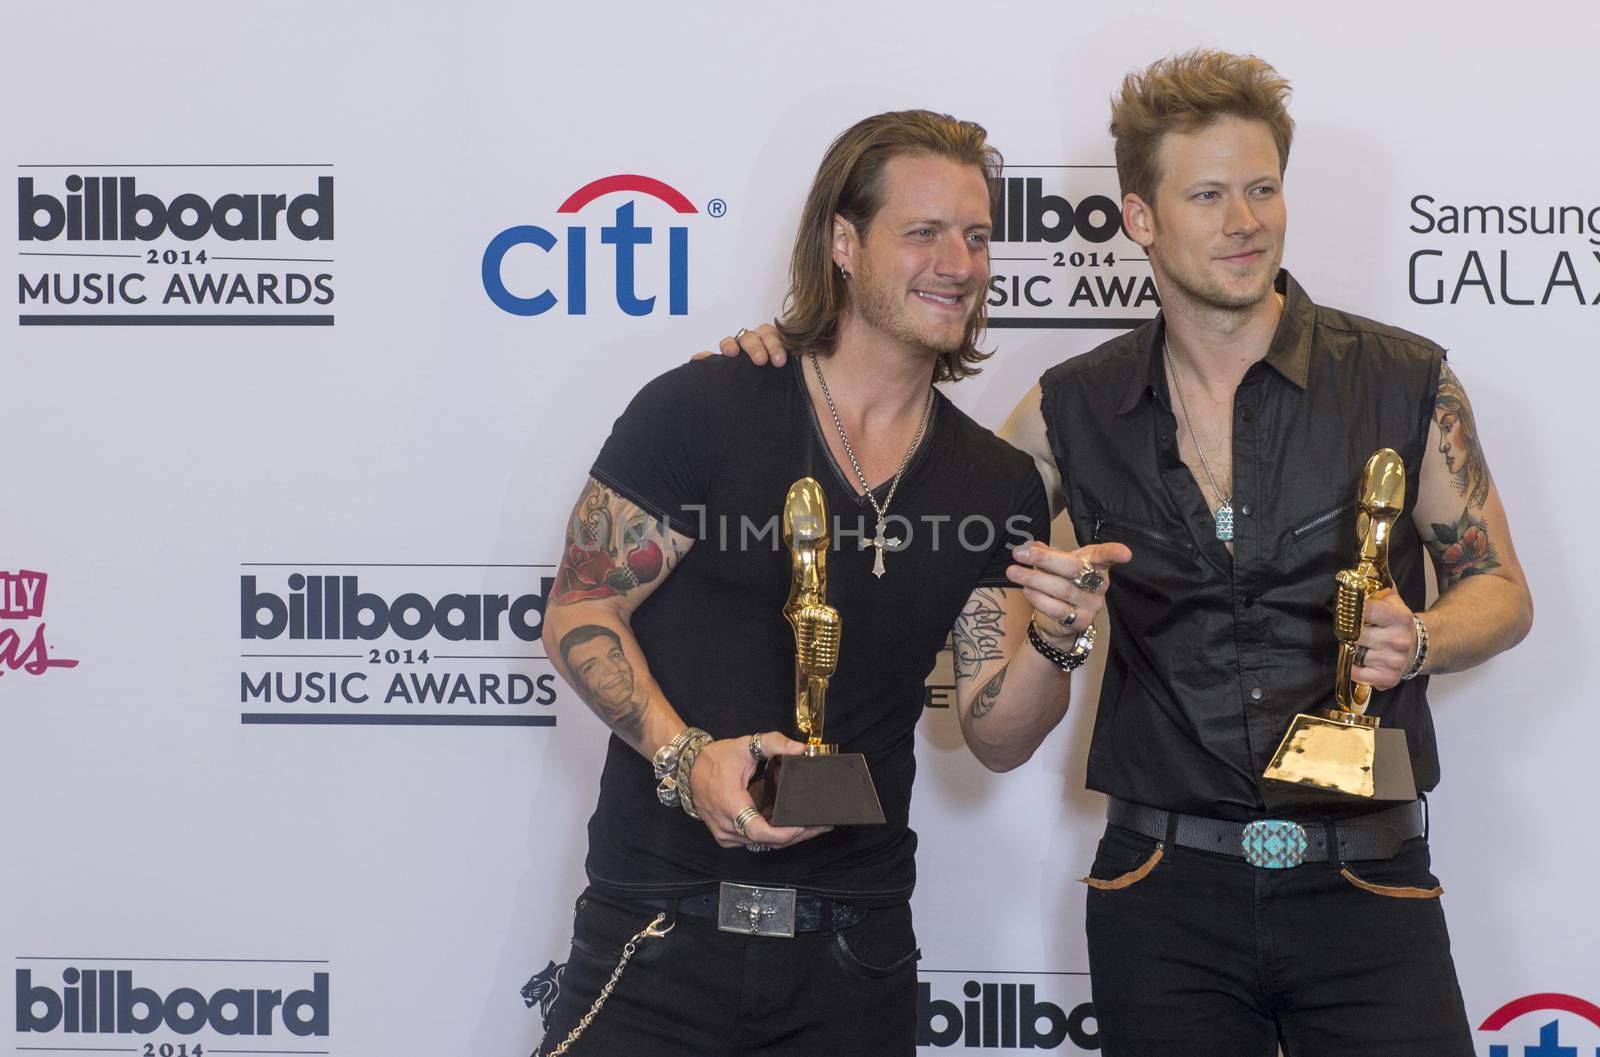 2014 Billboard Music Awards by kobby_dagan